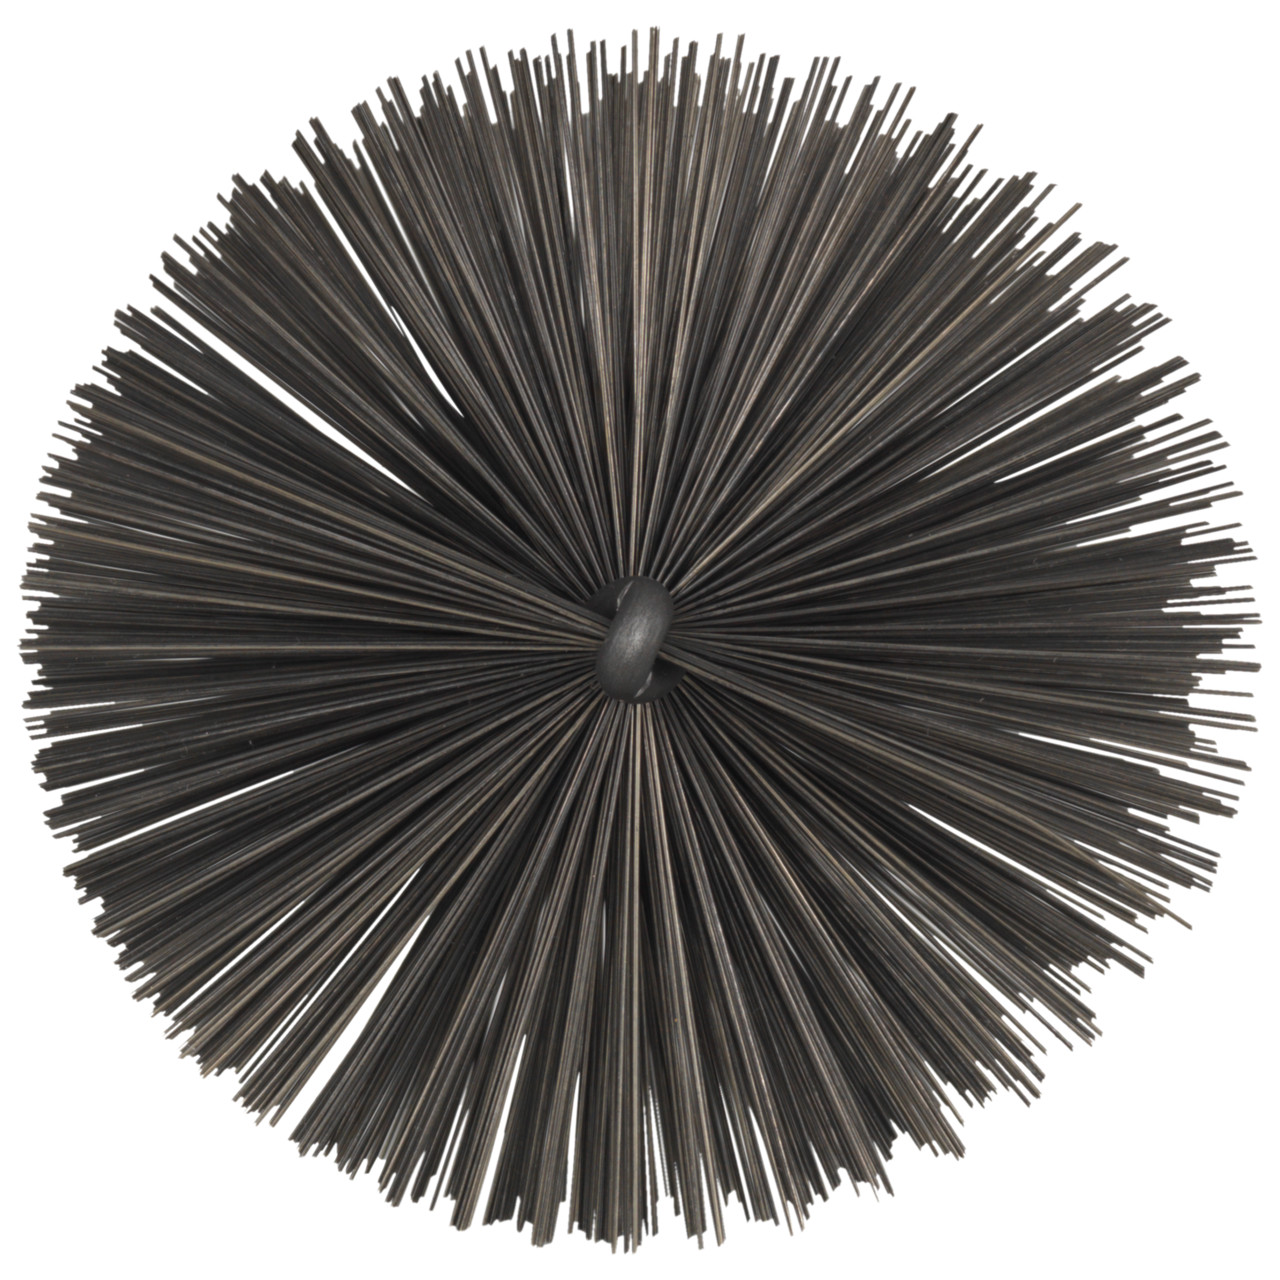 Tyrolit Buisborstel met buitendraad DxGE-I 30xB1/2-160 Voor staal, vorm: 18ROGDG - (buisborstel), Art. 34203602